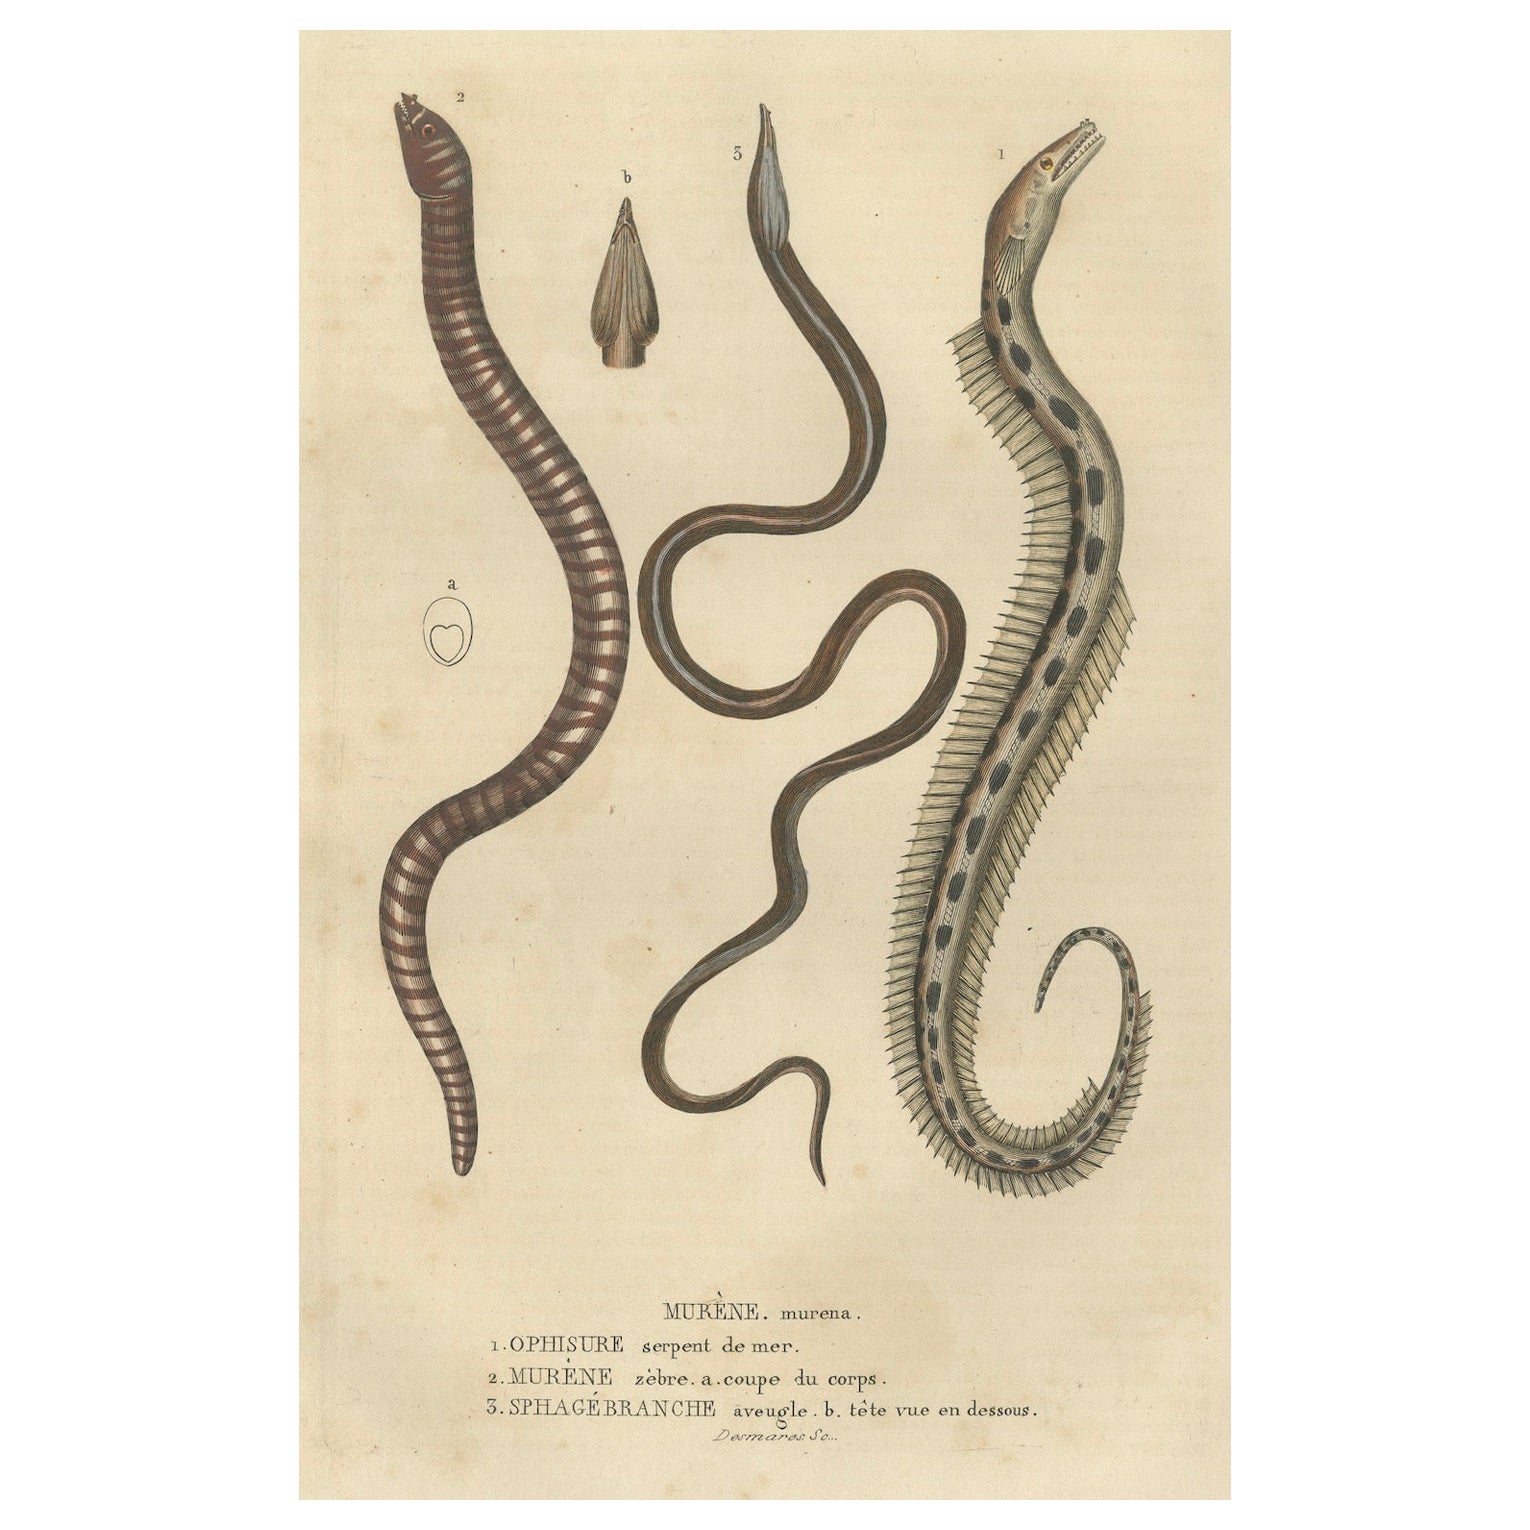 Aquatic Elegance: Brittle Star, Zebra Moray Eel, and Blind Cave Eel, 1845